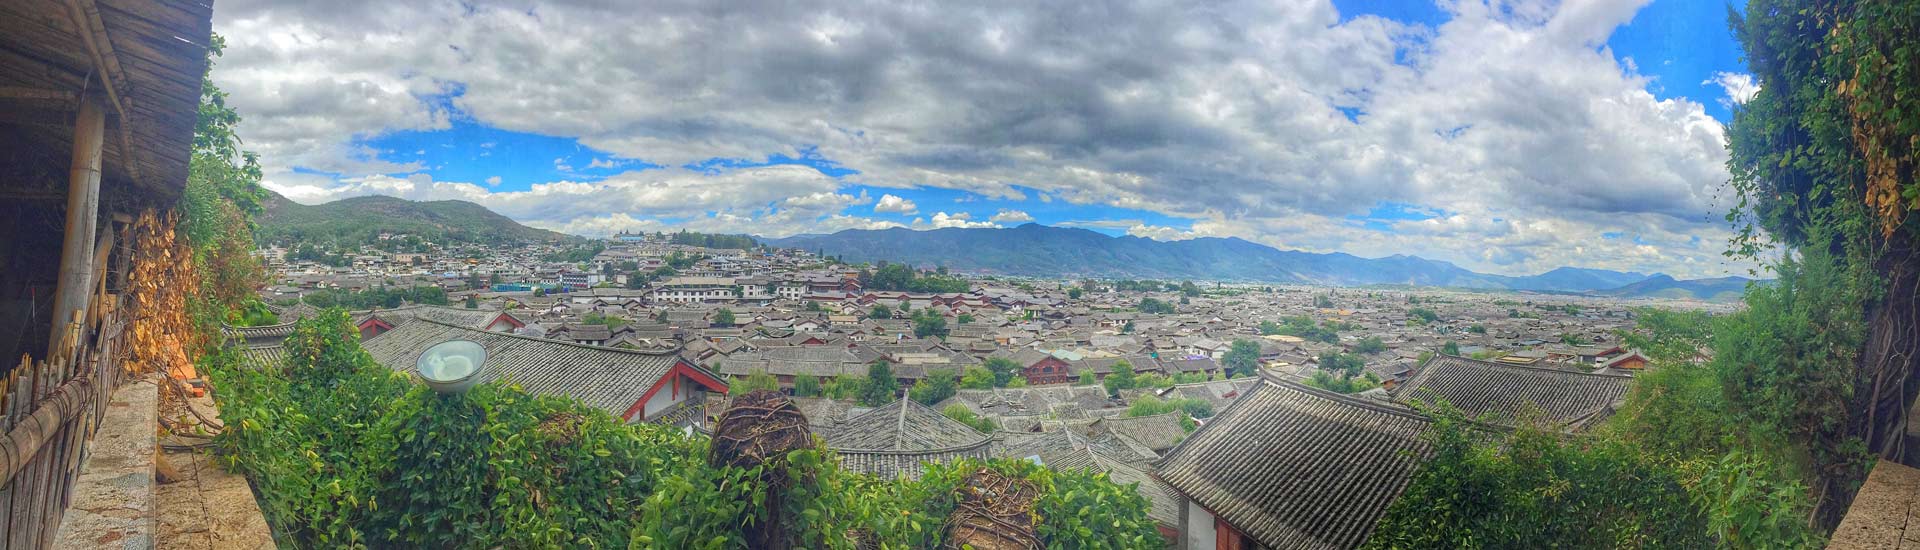 7 Days Kunming - Dali - Lijiang - Shangri-La Small Group Tour